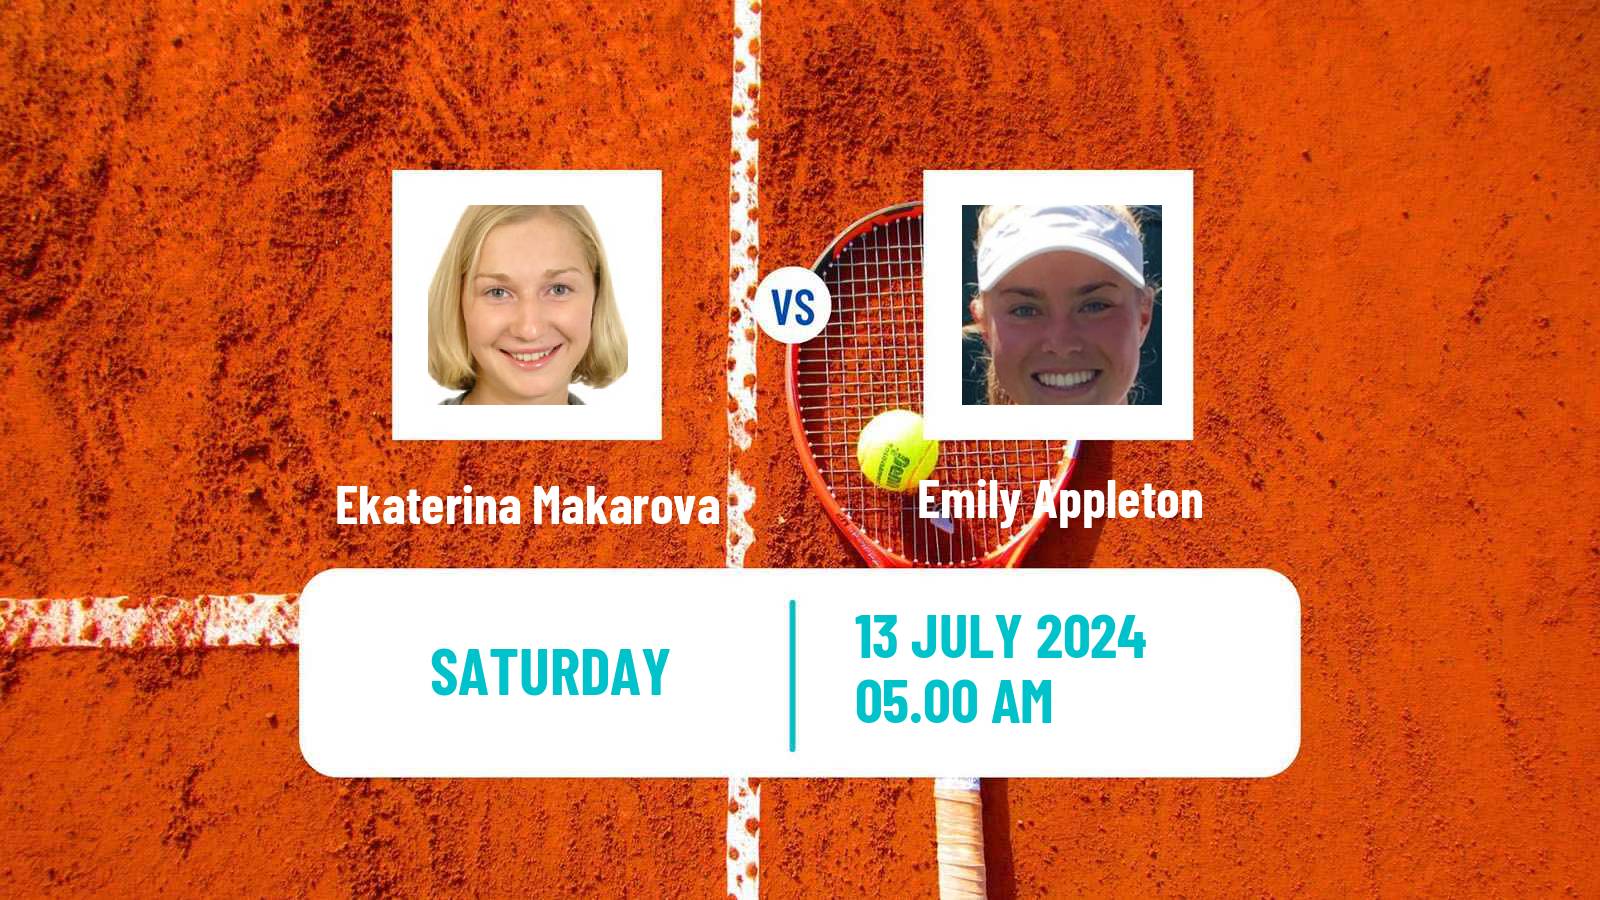 Tennis WTA Budapest Ekaterina Makarova - Emily Appleton